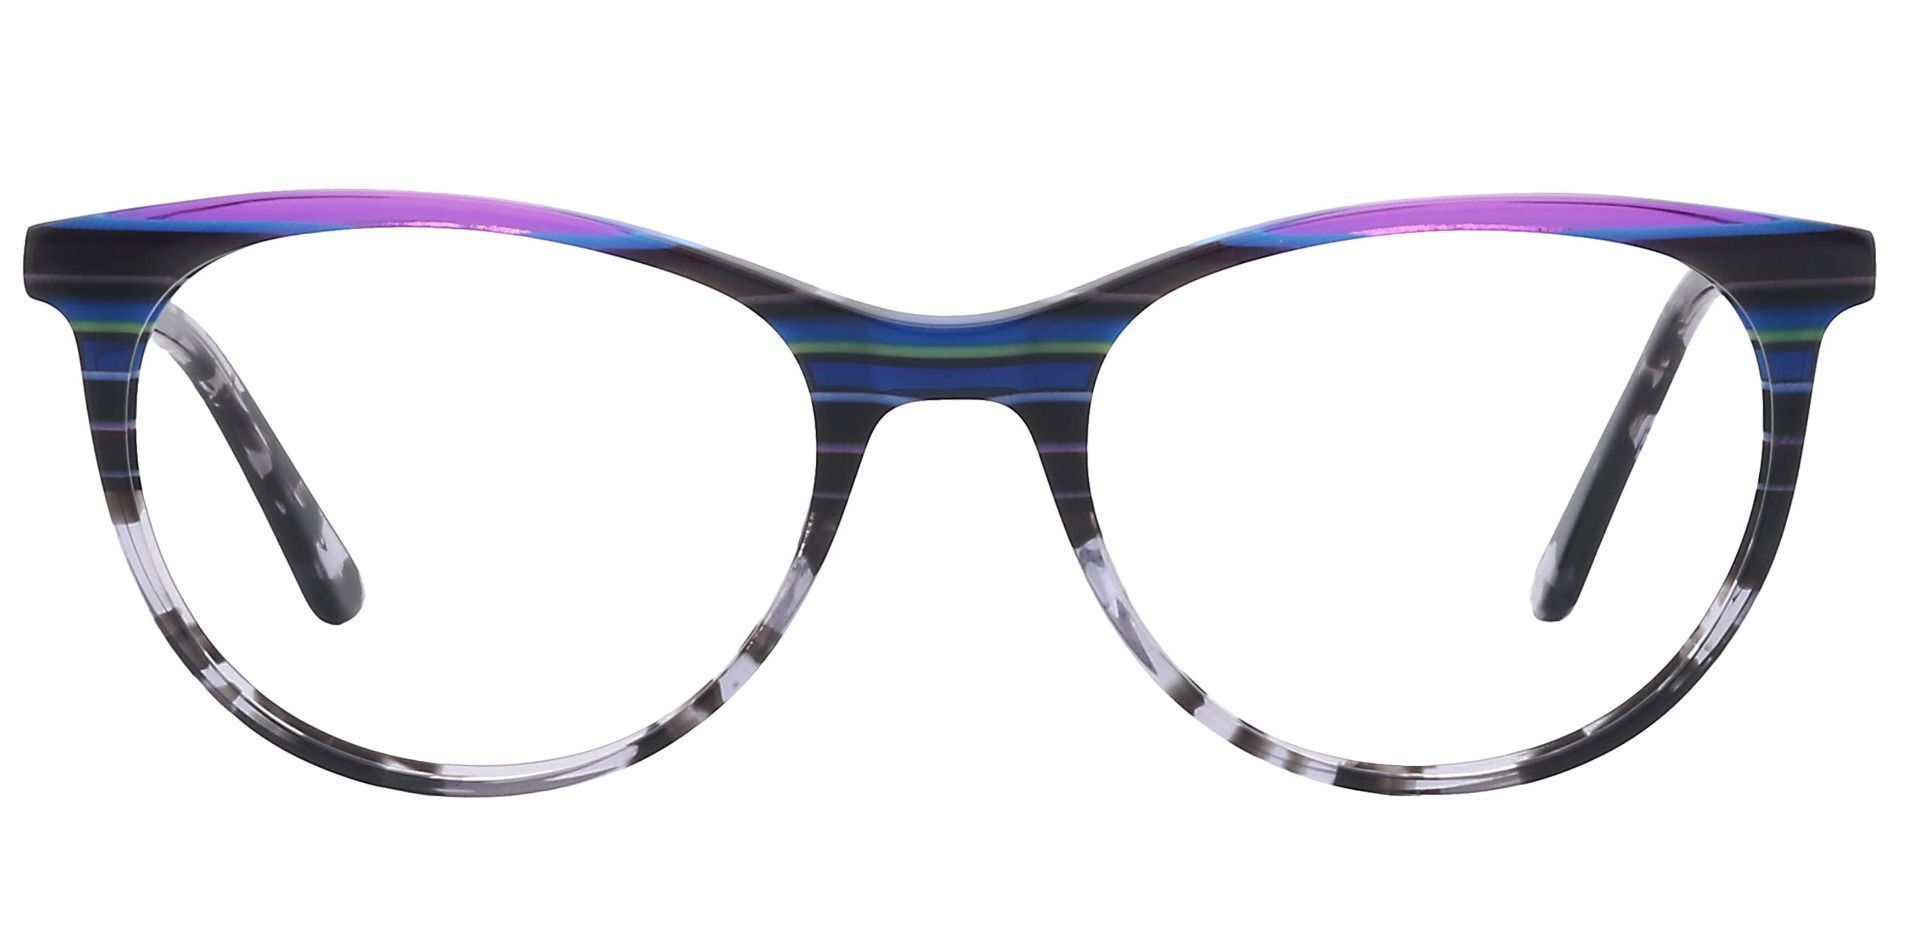 Patagonia Oval Reading Glasses - Multicolored Blue Stripes  Multicolor